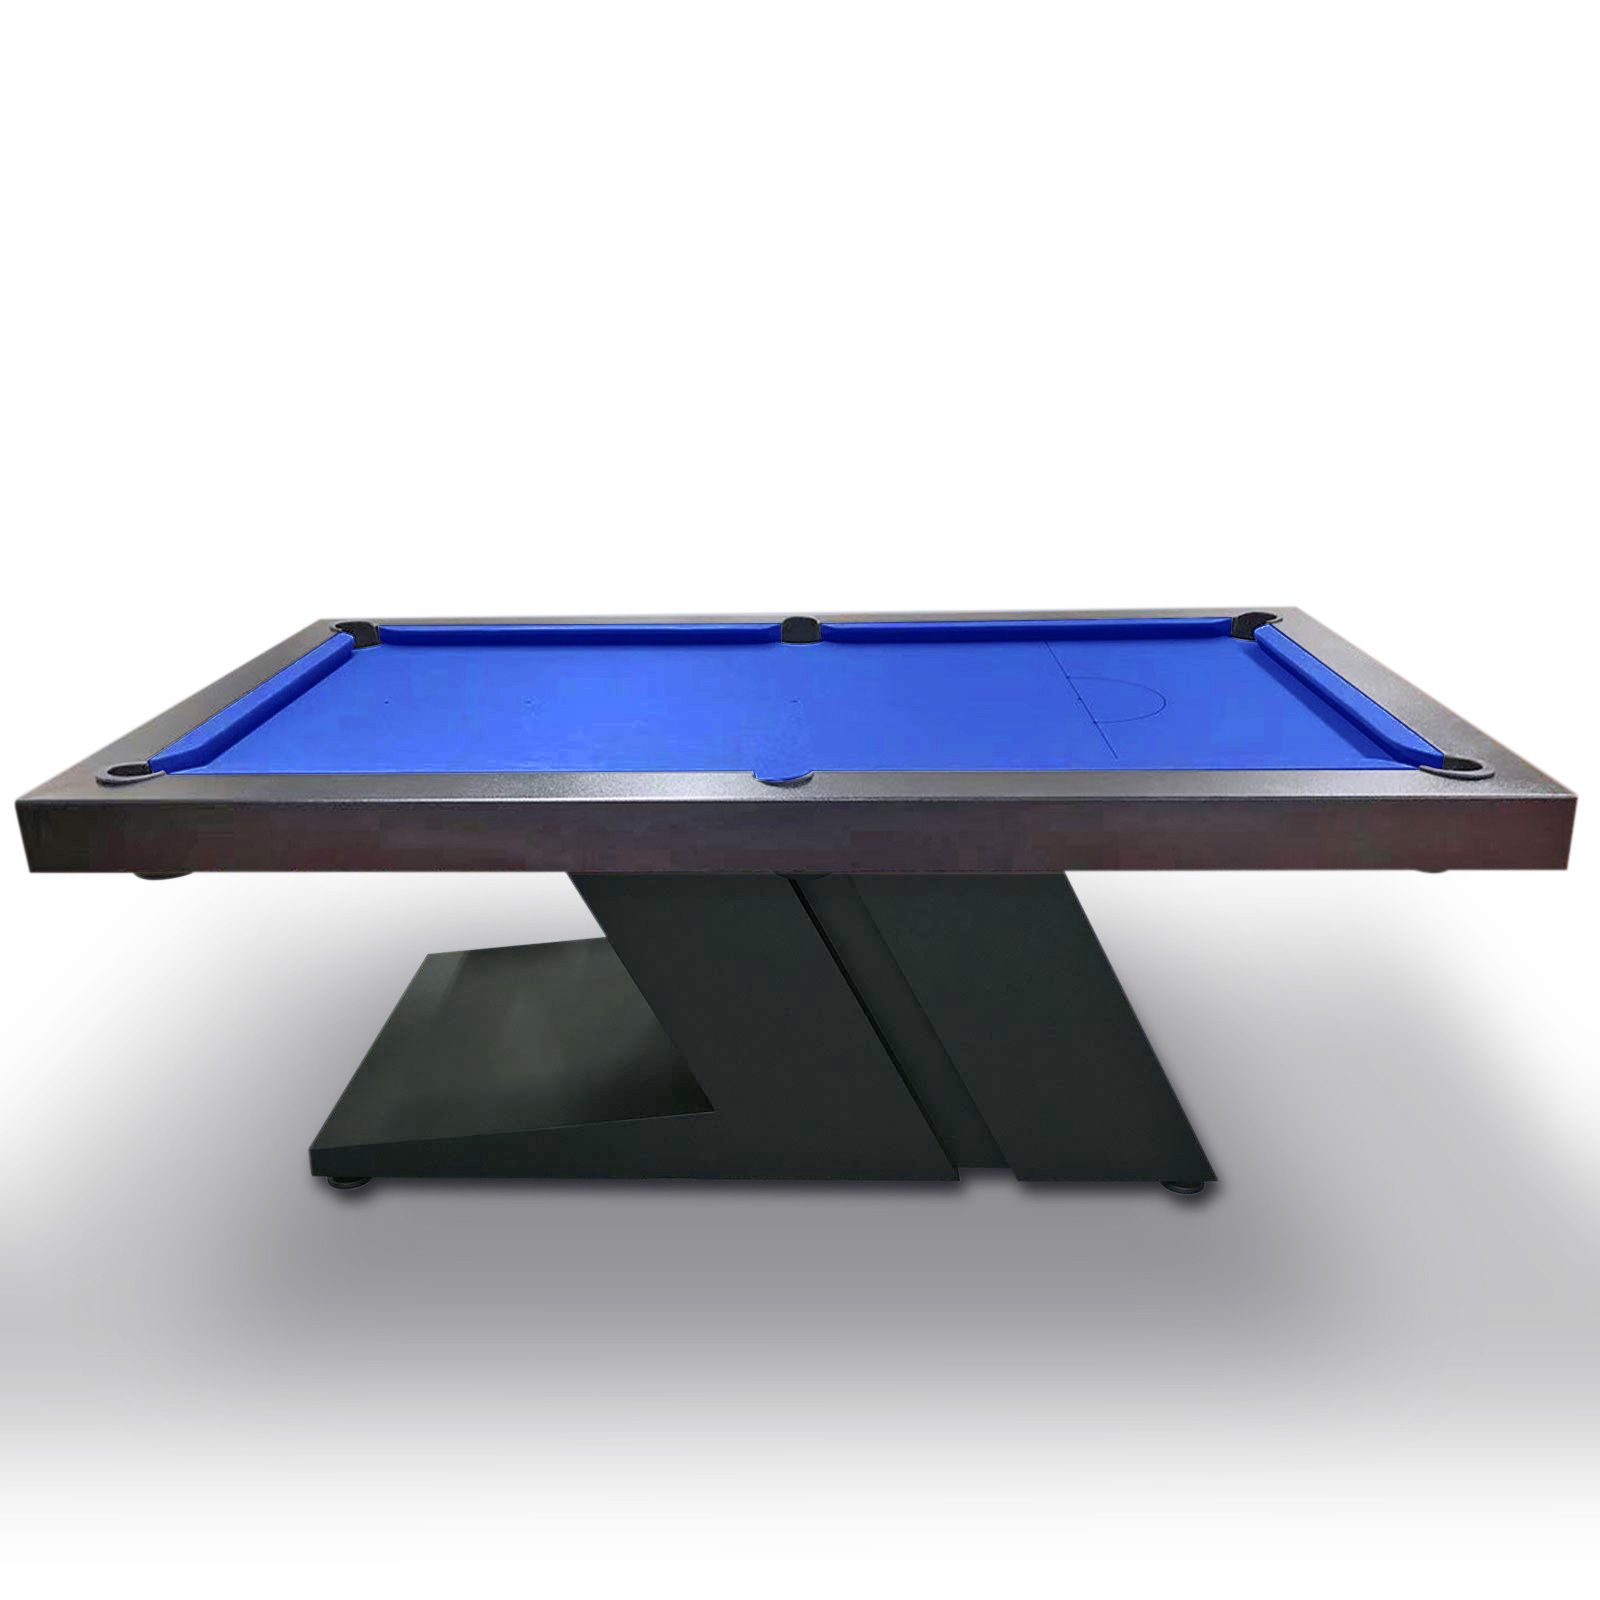 7 Foot Slate CyberPool Outdoor Billiards Table